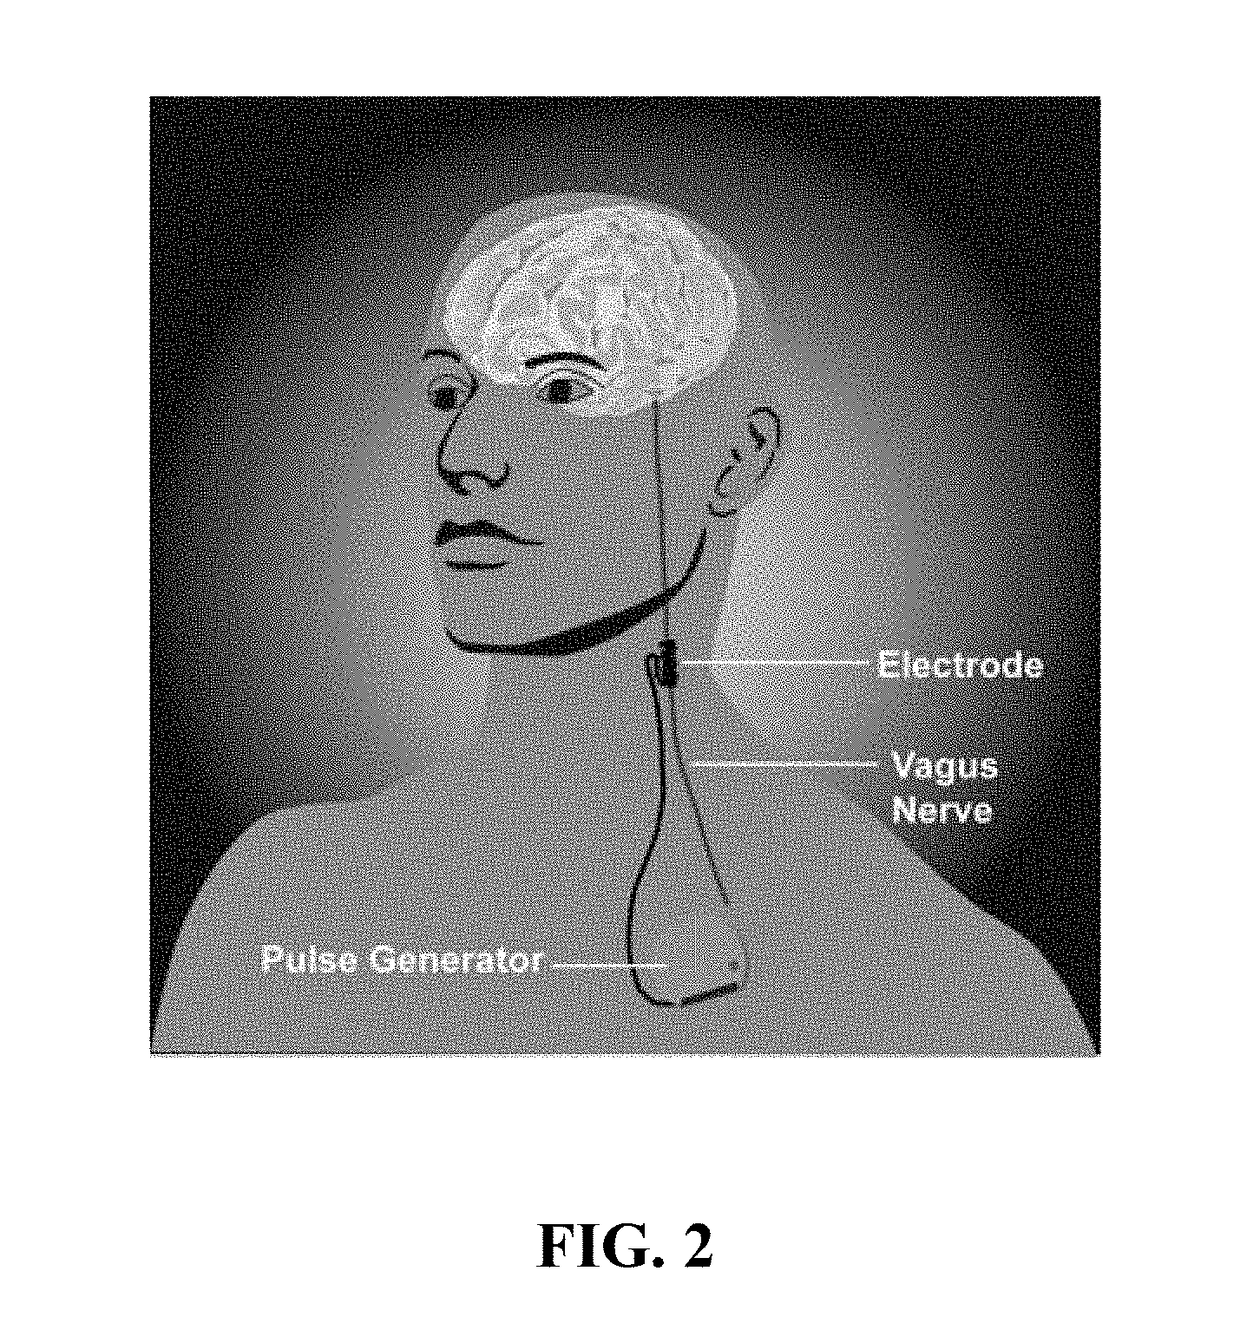 Skull implanted electrode assembly for brain stimulation